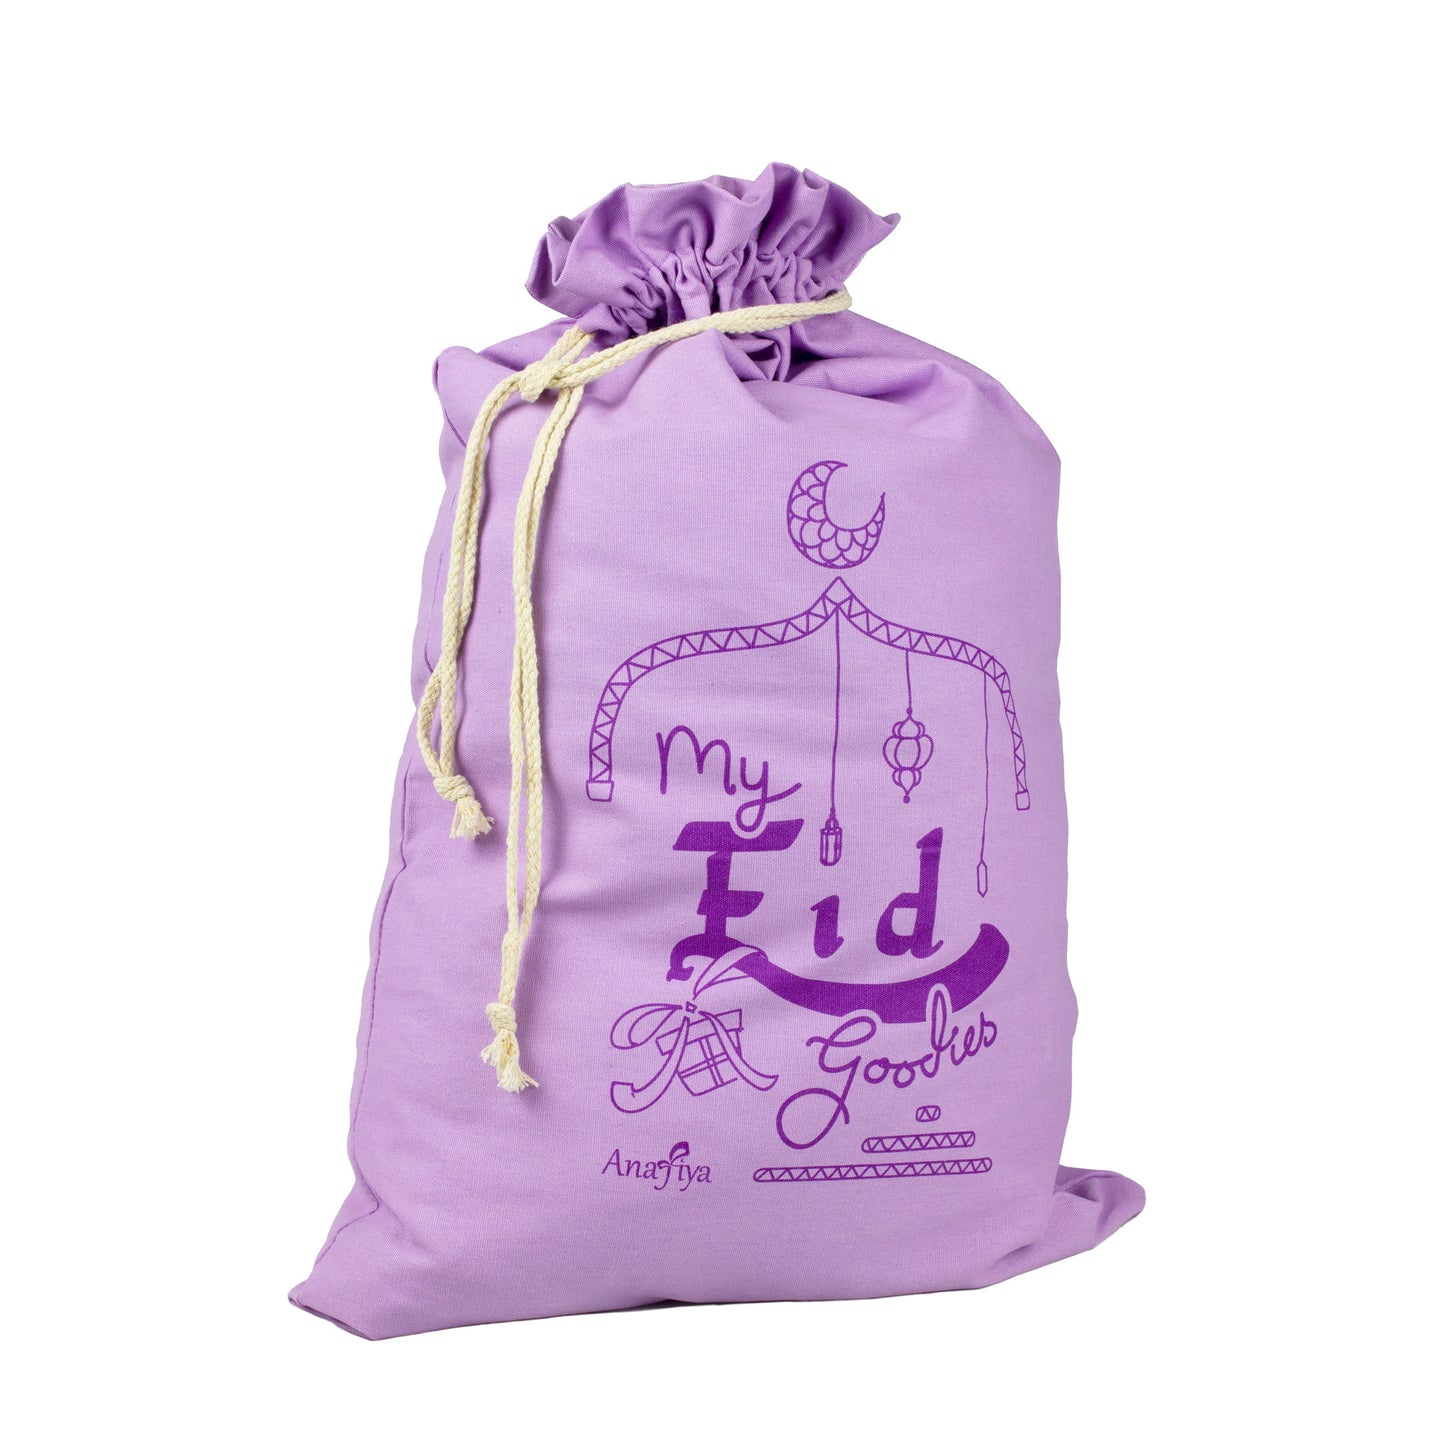 My Eid Goodies Gift Sack - Purple